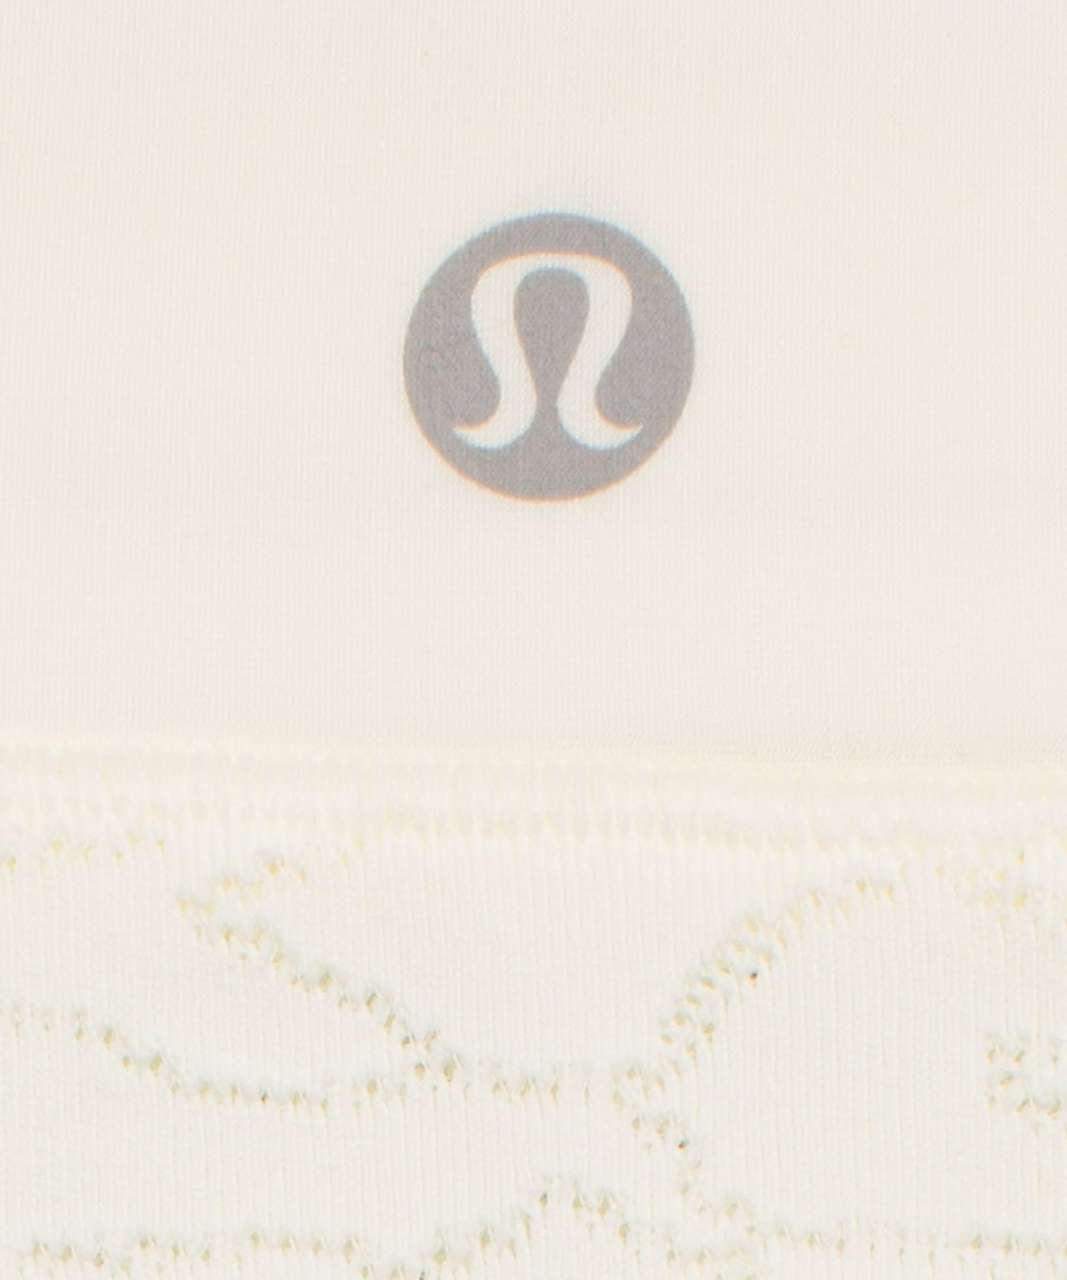 Lululemon UnderEase Mid-Rise Bikini Underwear 3 Pack - ShopStyle Panties